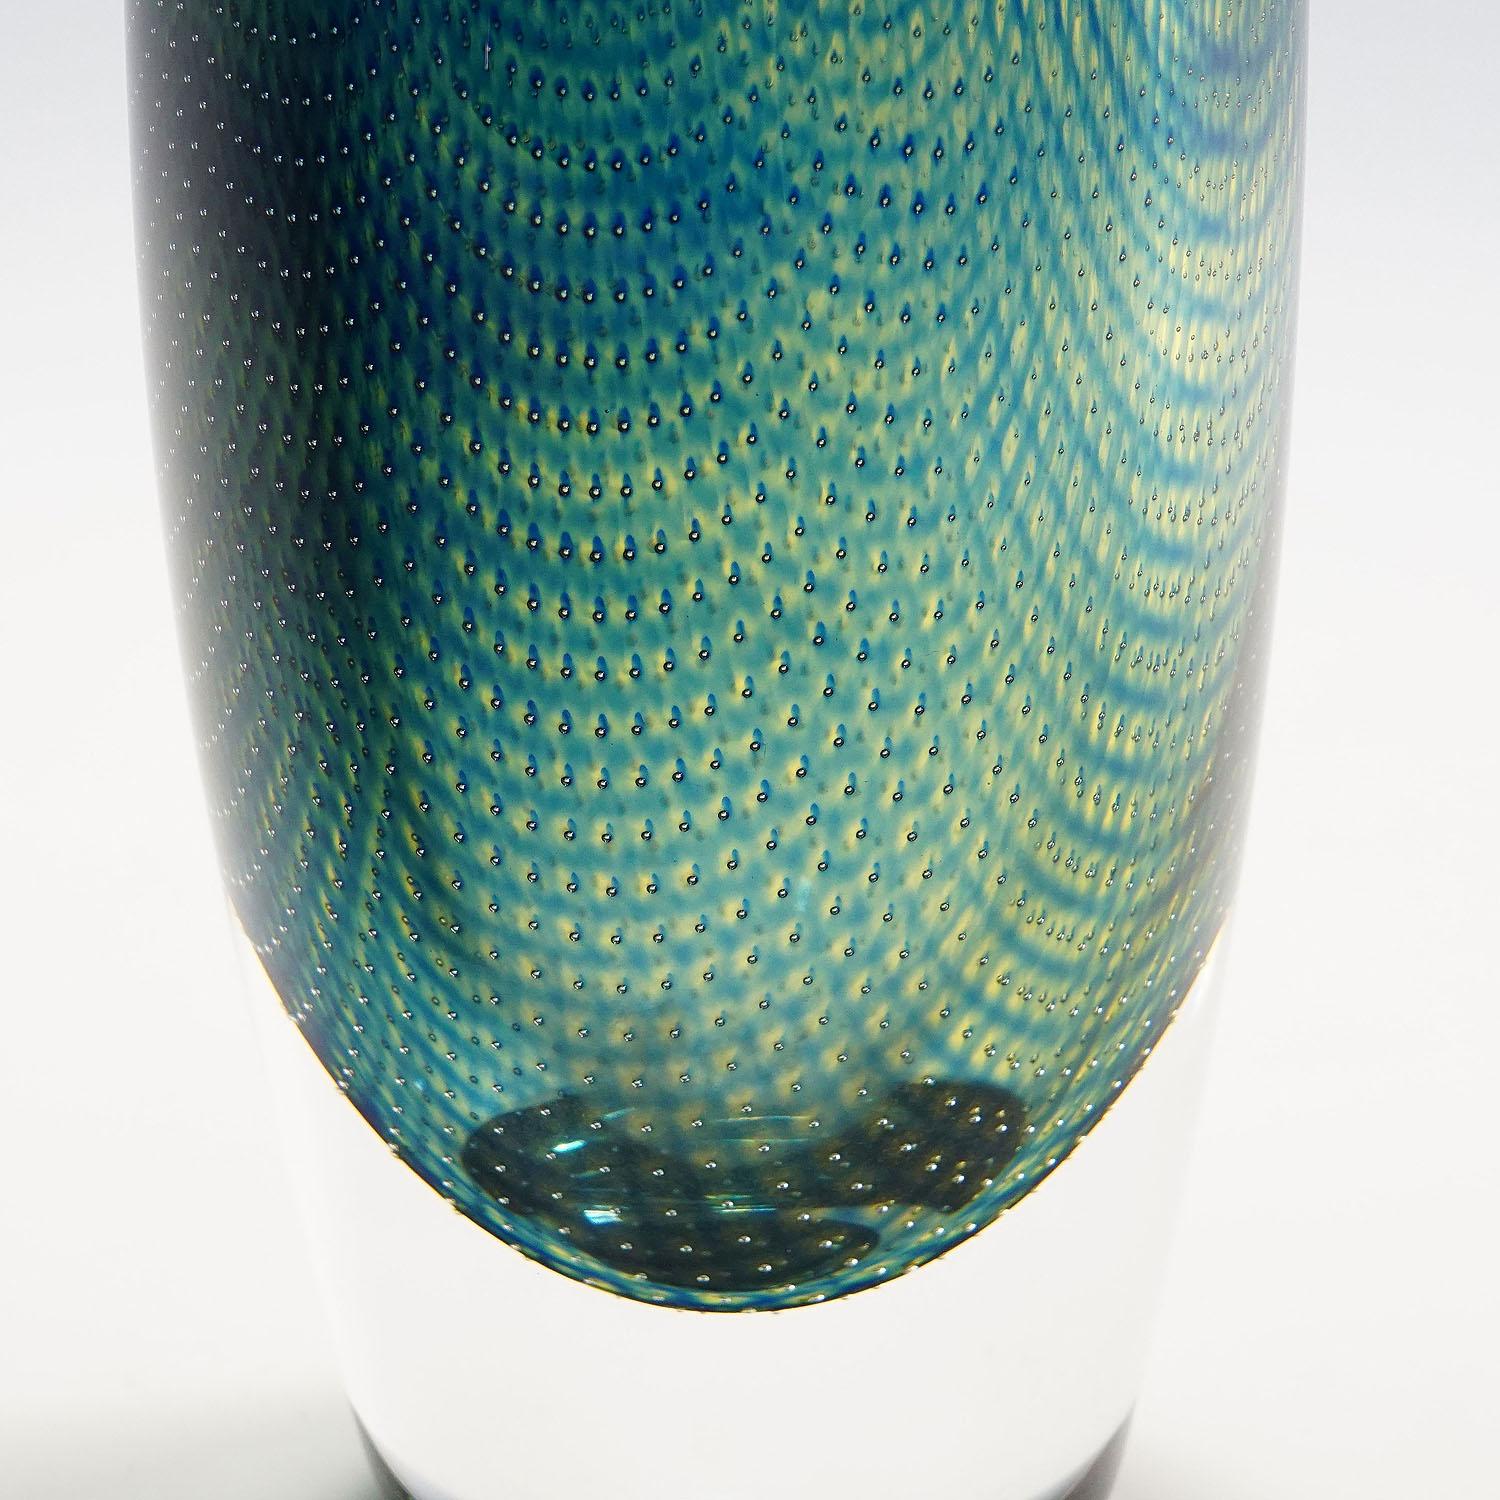 20th Century Kraka Vase Designed by Sven Palmquist for Orrefors, Sweden in 1954